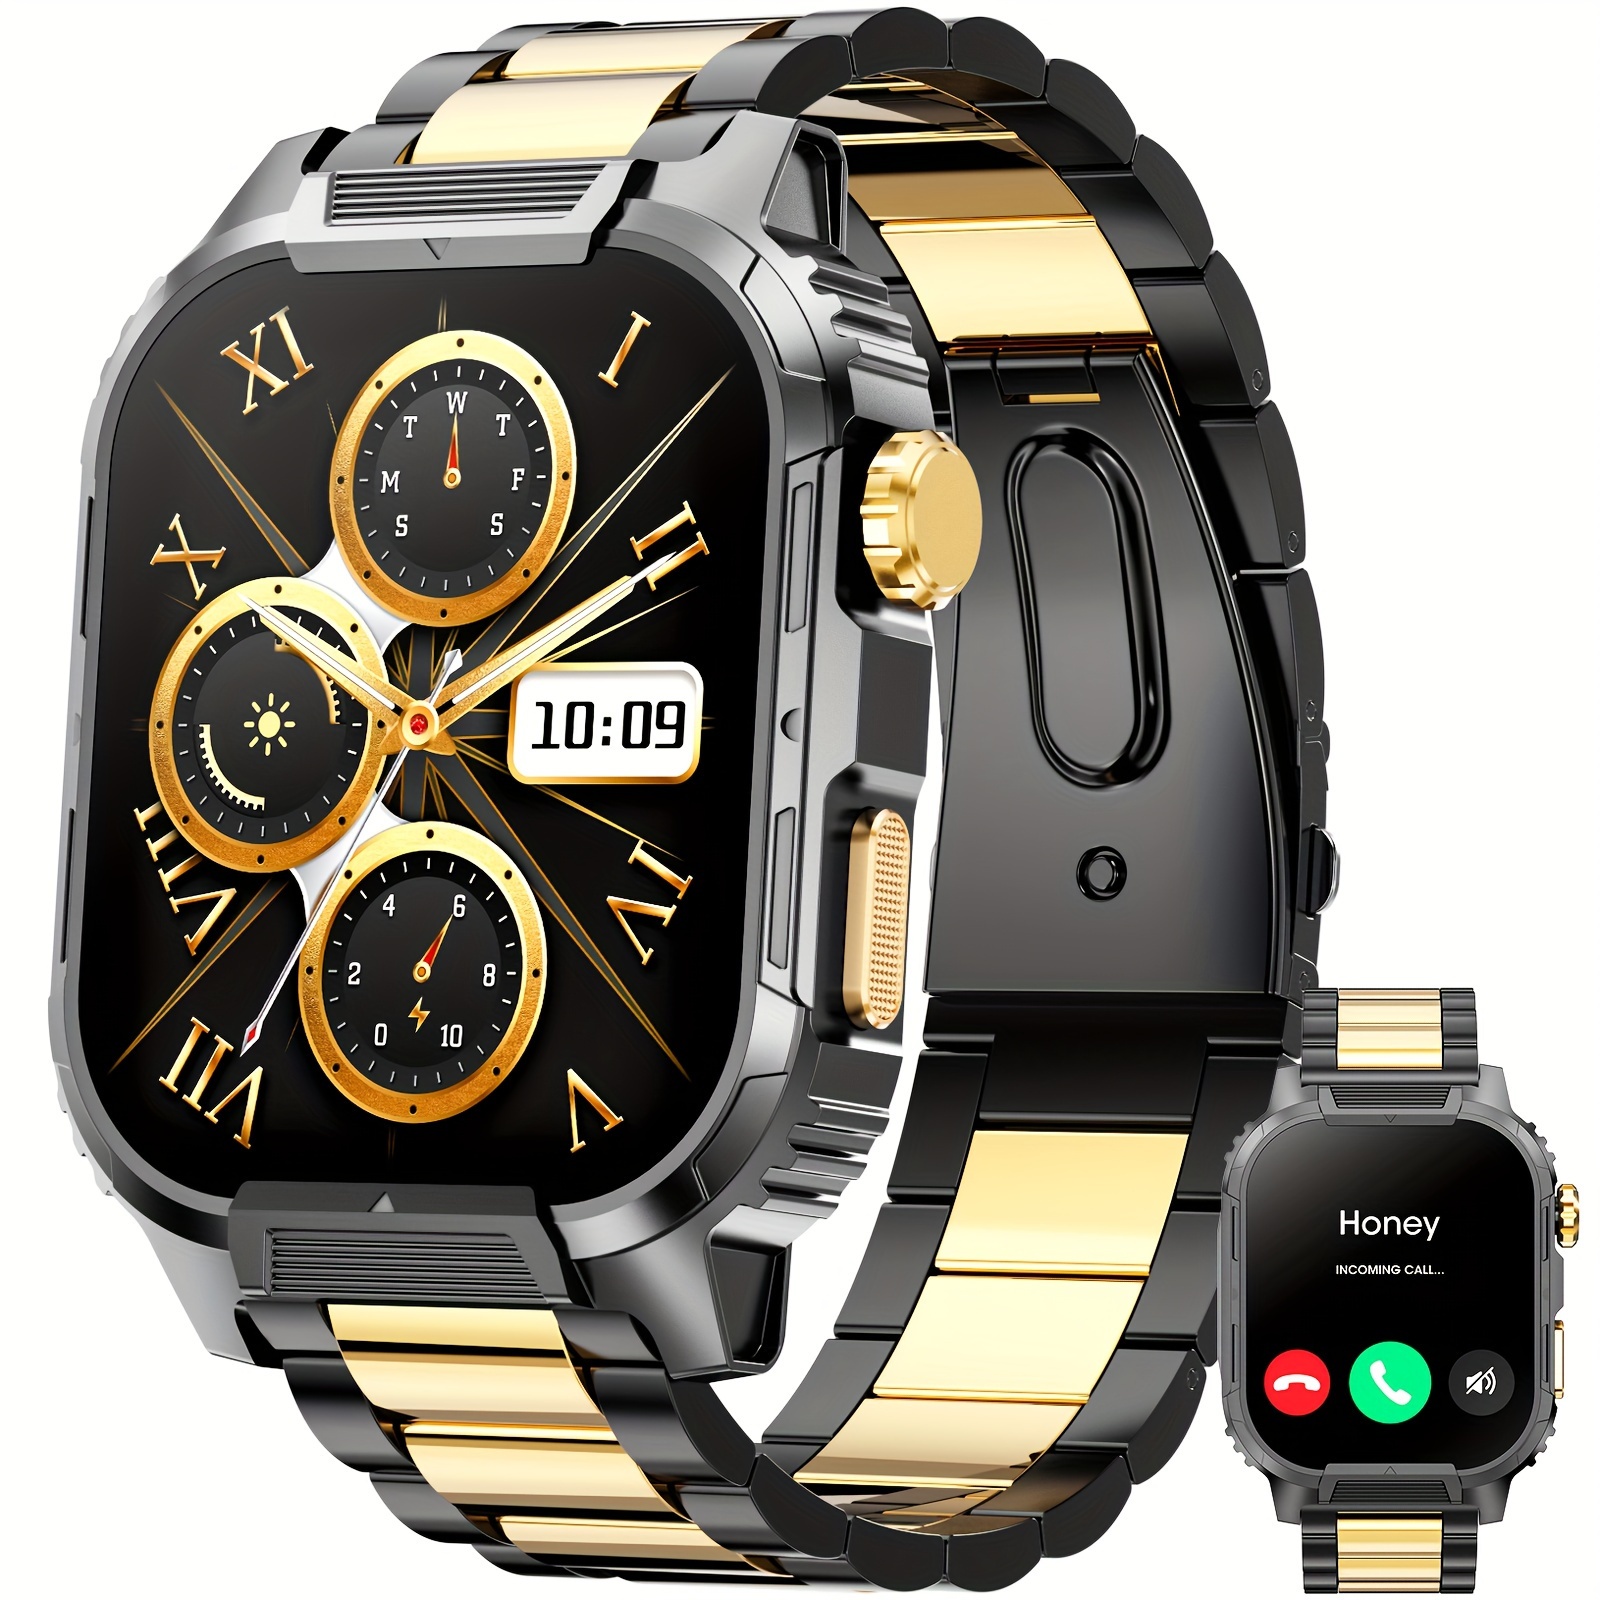 

Men's Smart Watch, Wireless Calling (answer/make Calls), 2.02-inch Fitness Watch, 100+ Sports Modes, Fitness , Men's Smart Watch, Voice Assistant, Women's Smart Watch